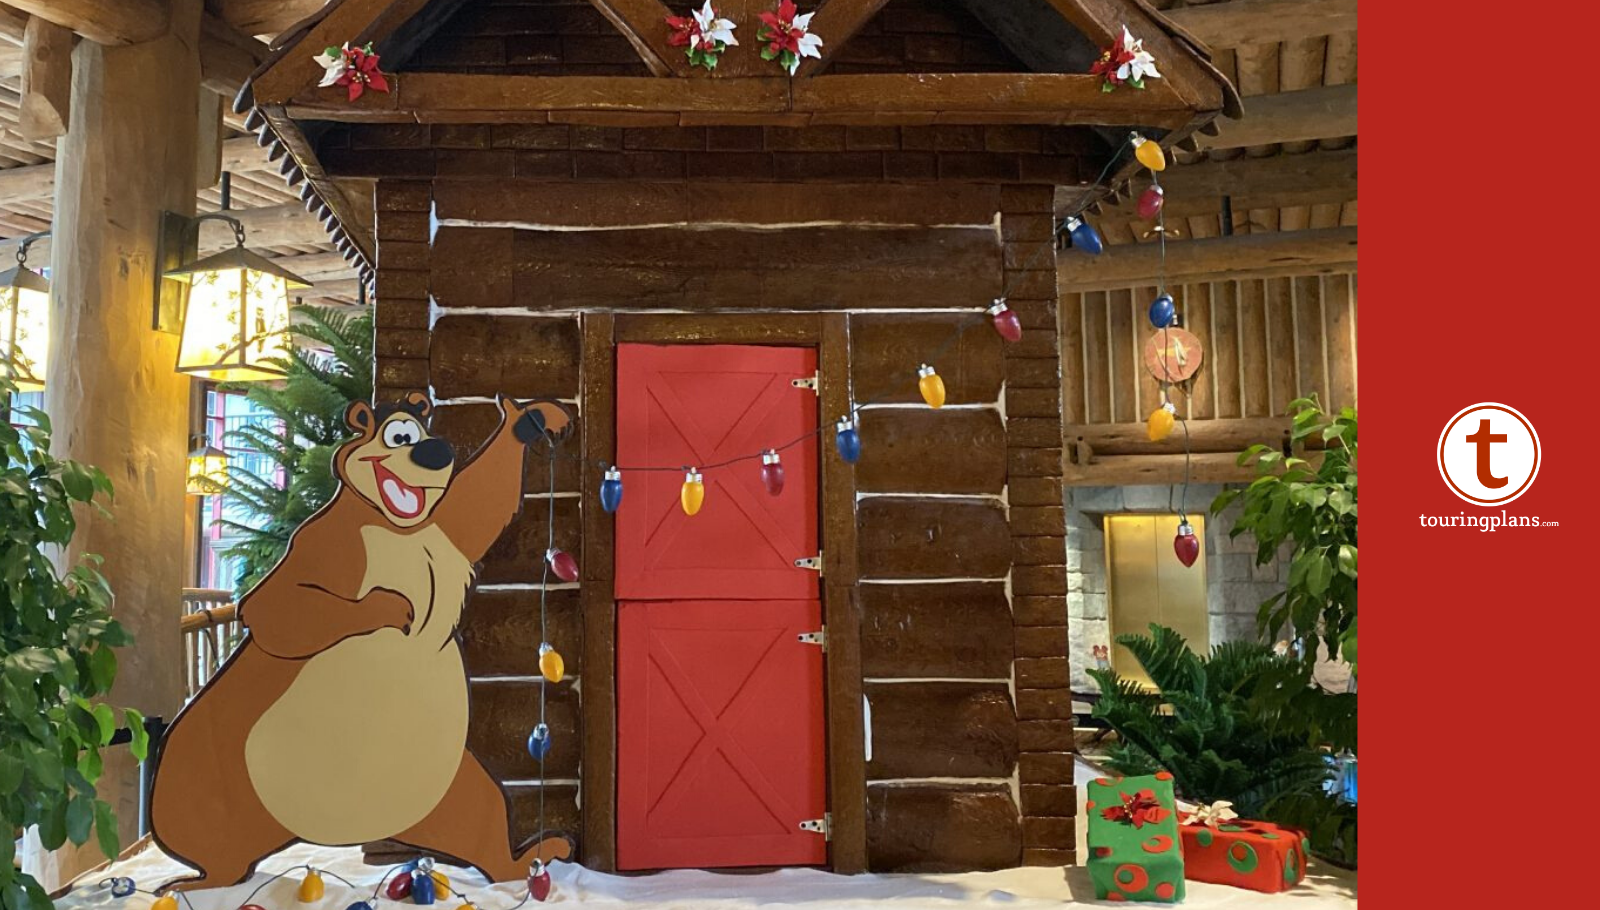 Christmas Gingerbread House at Wilderness Lodge - Disney Tourist Blog